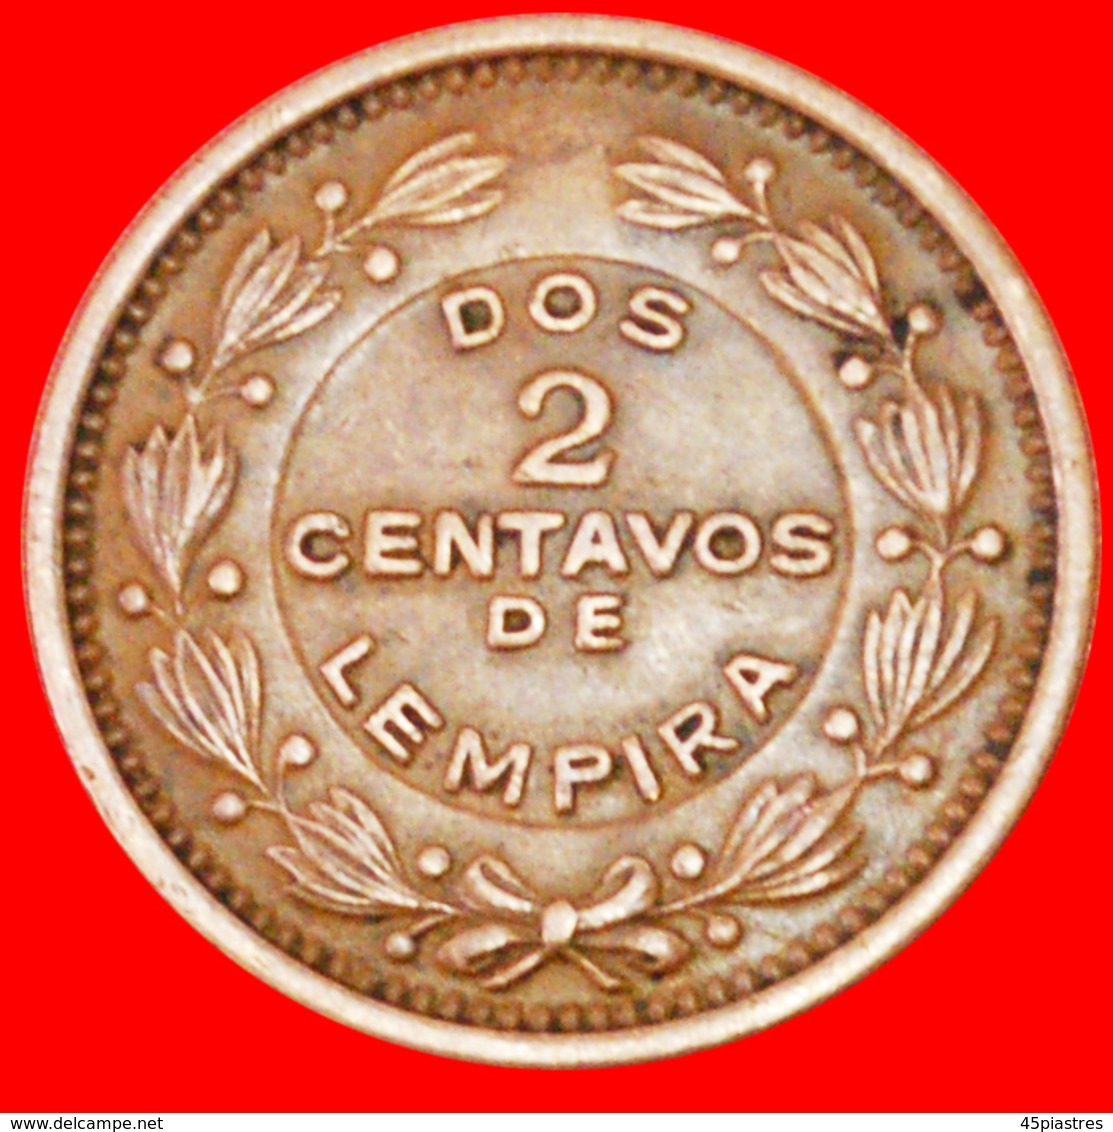 # USA (1939-1956): HONDURAS ★ 2 CENTAVOS DE LEMPIRA 1939! LOW START ★ NO RESERVE! - Honduras